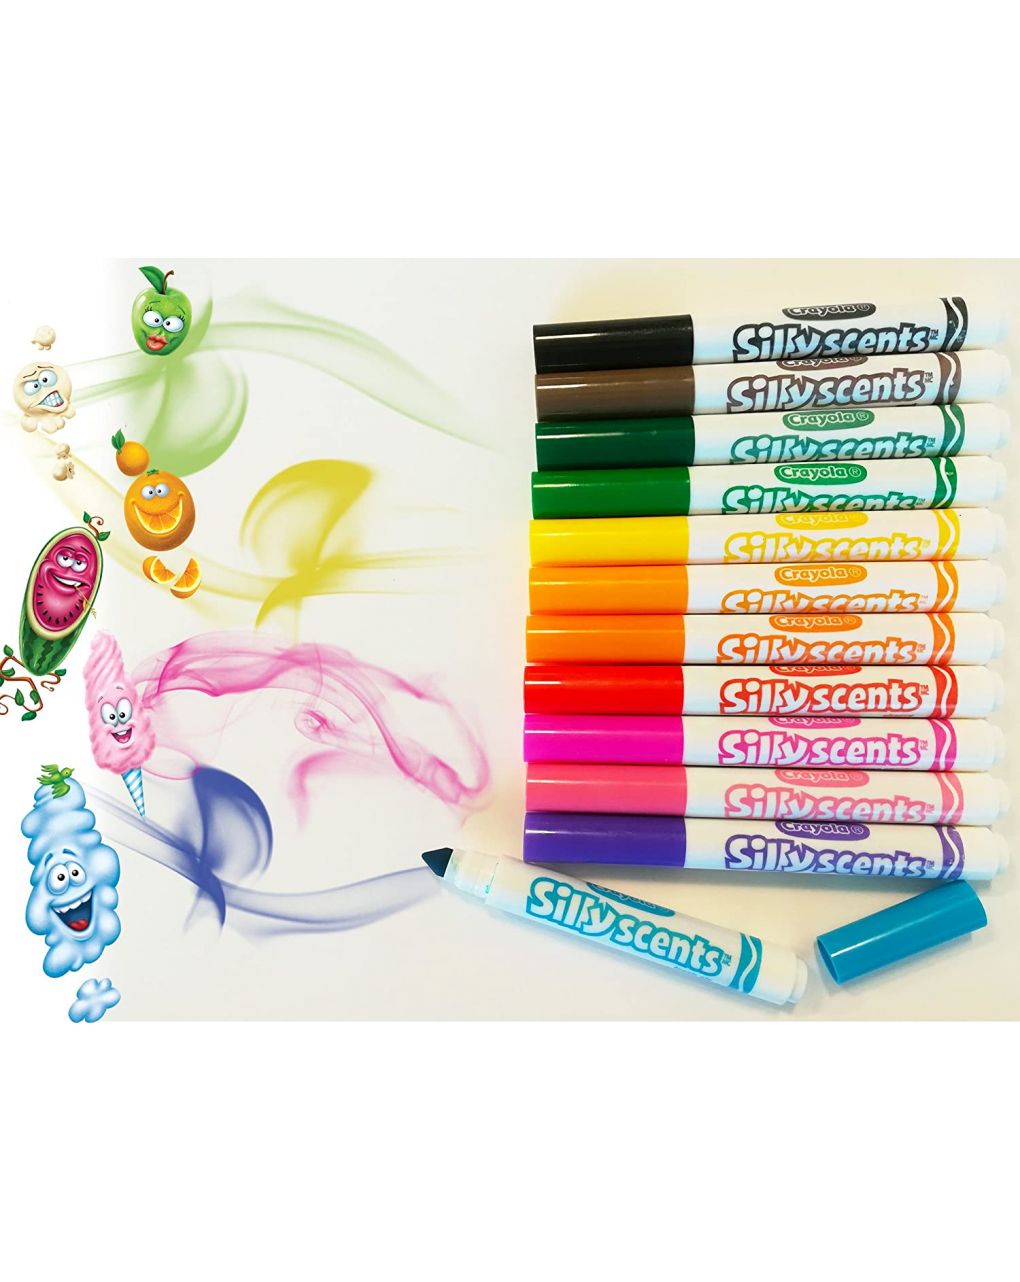 Crayola - 12 pennarelli profumelli maxi punta lavabili - Crayola